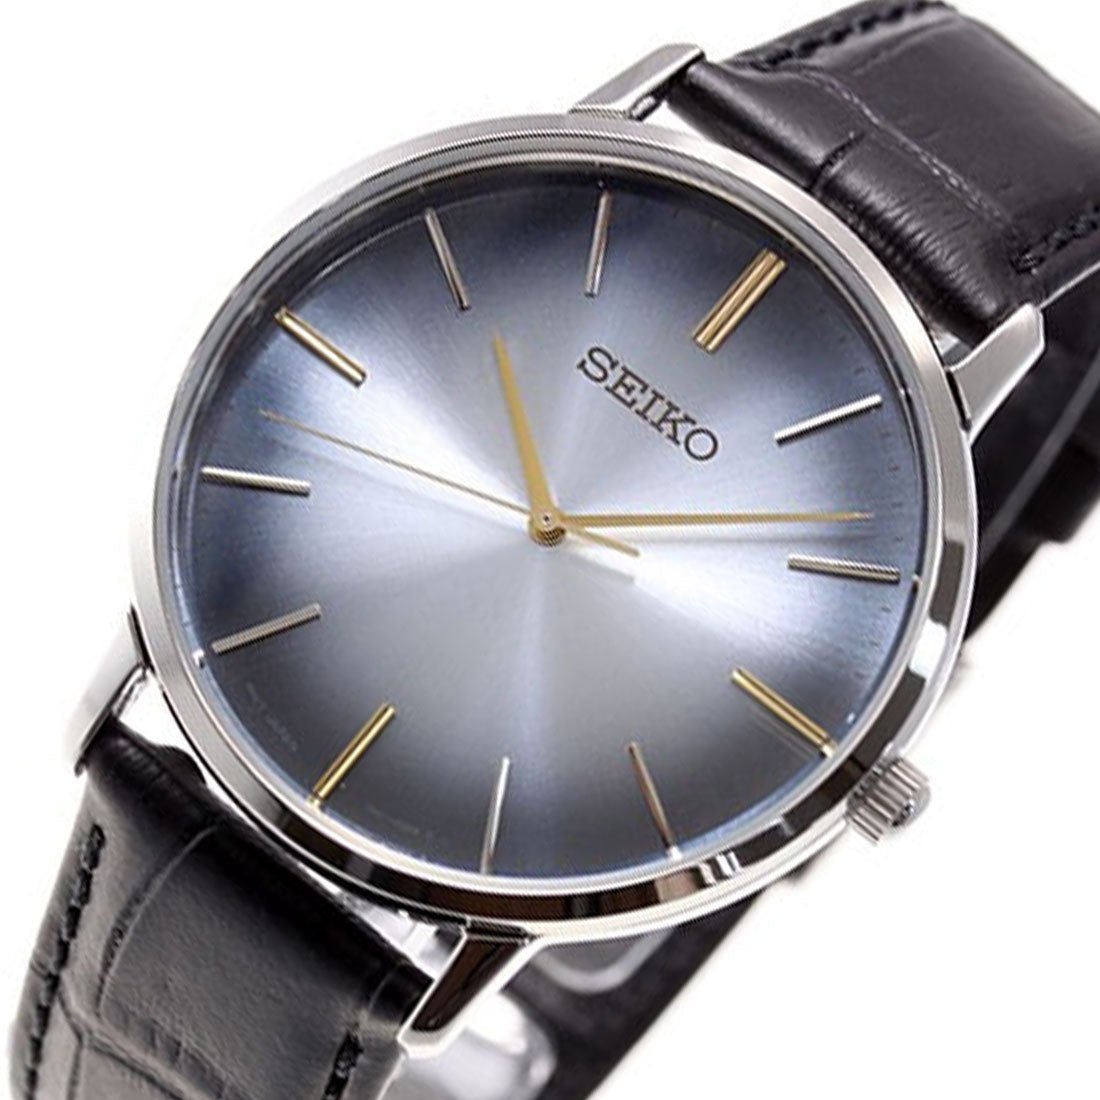 Seiko Selection Leather JDM Watch SCXP125 -Seiko